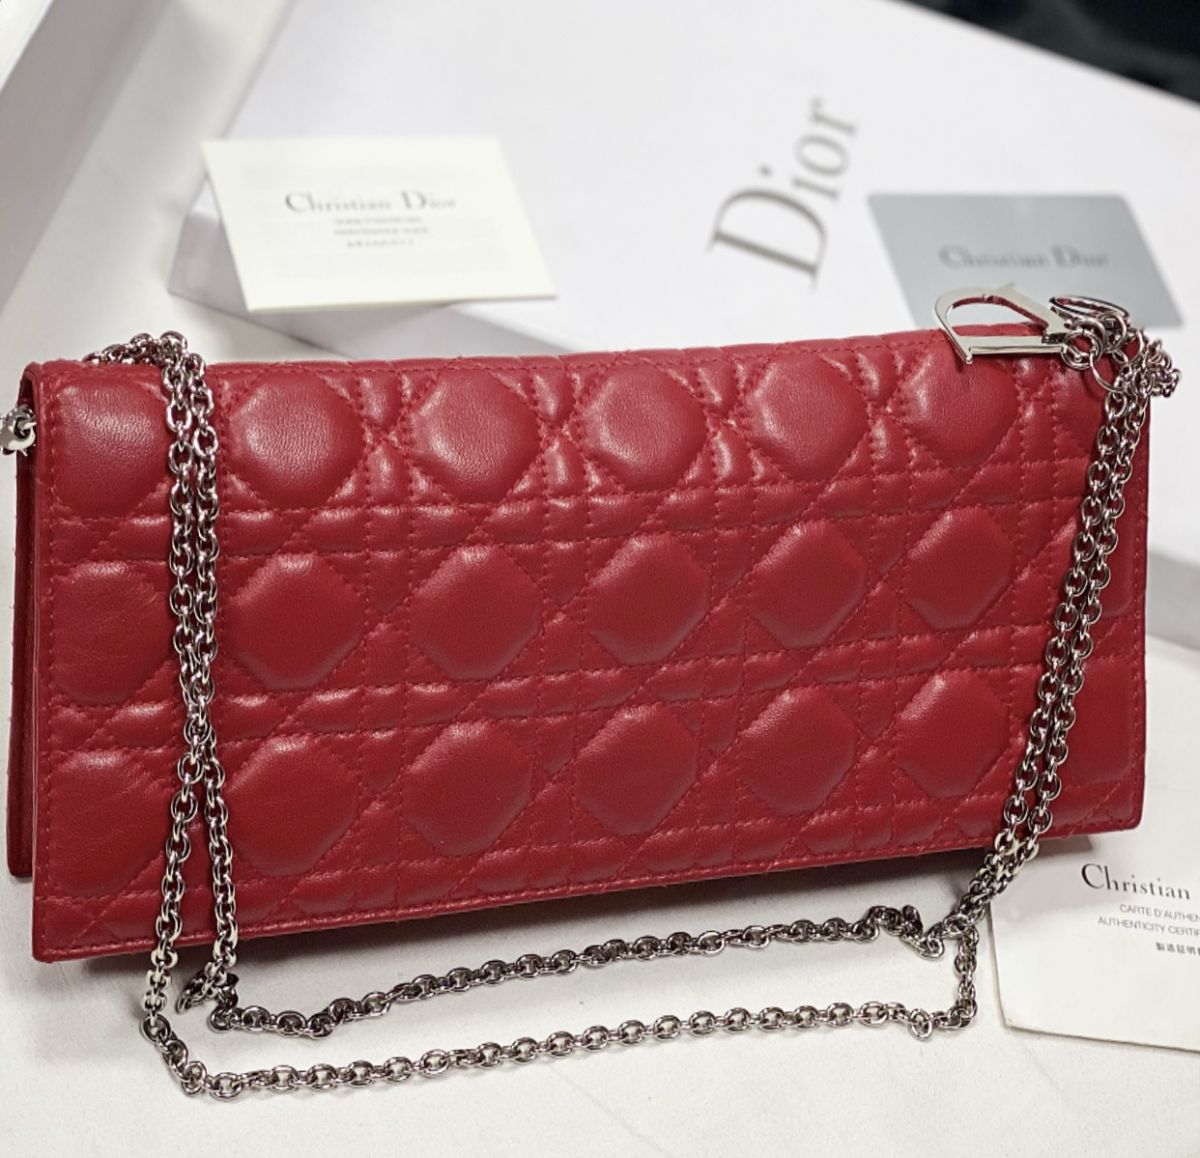 Сумка Christian Dior размер 27/12 цена 61 540 руб / карточки / 